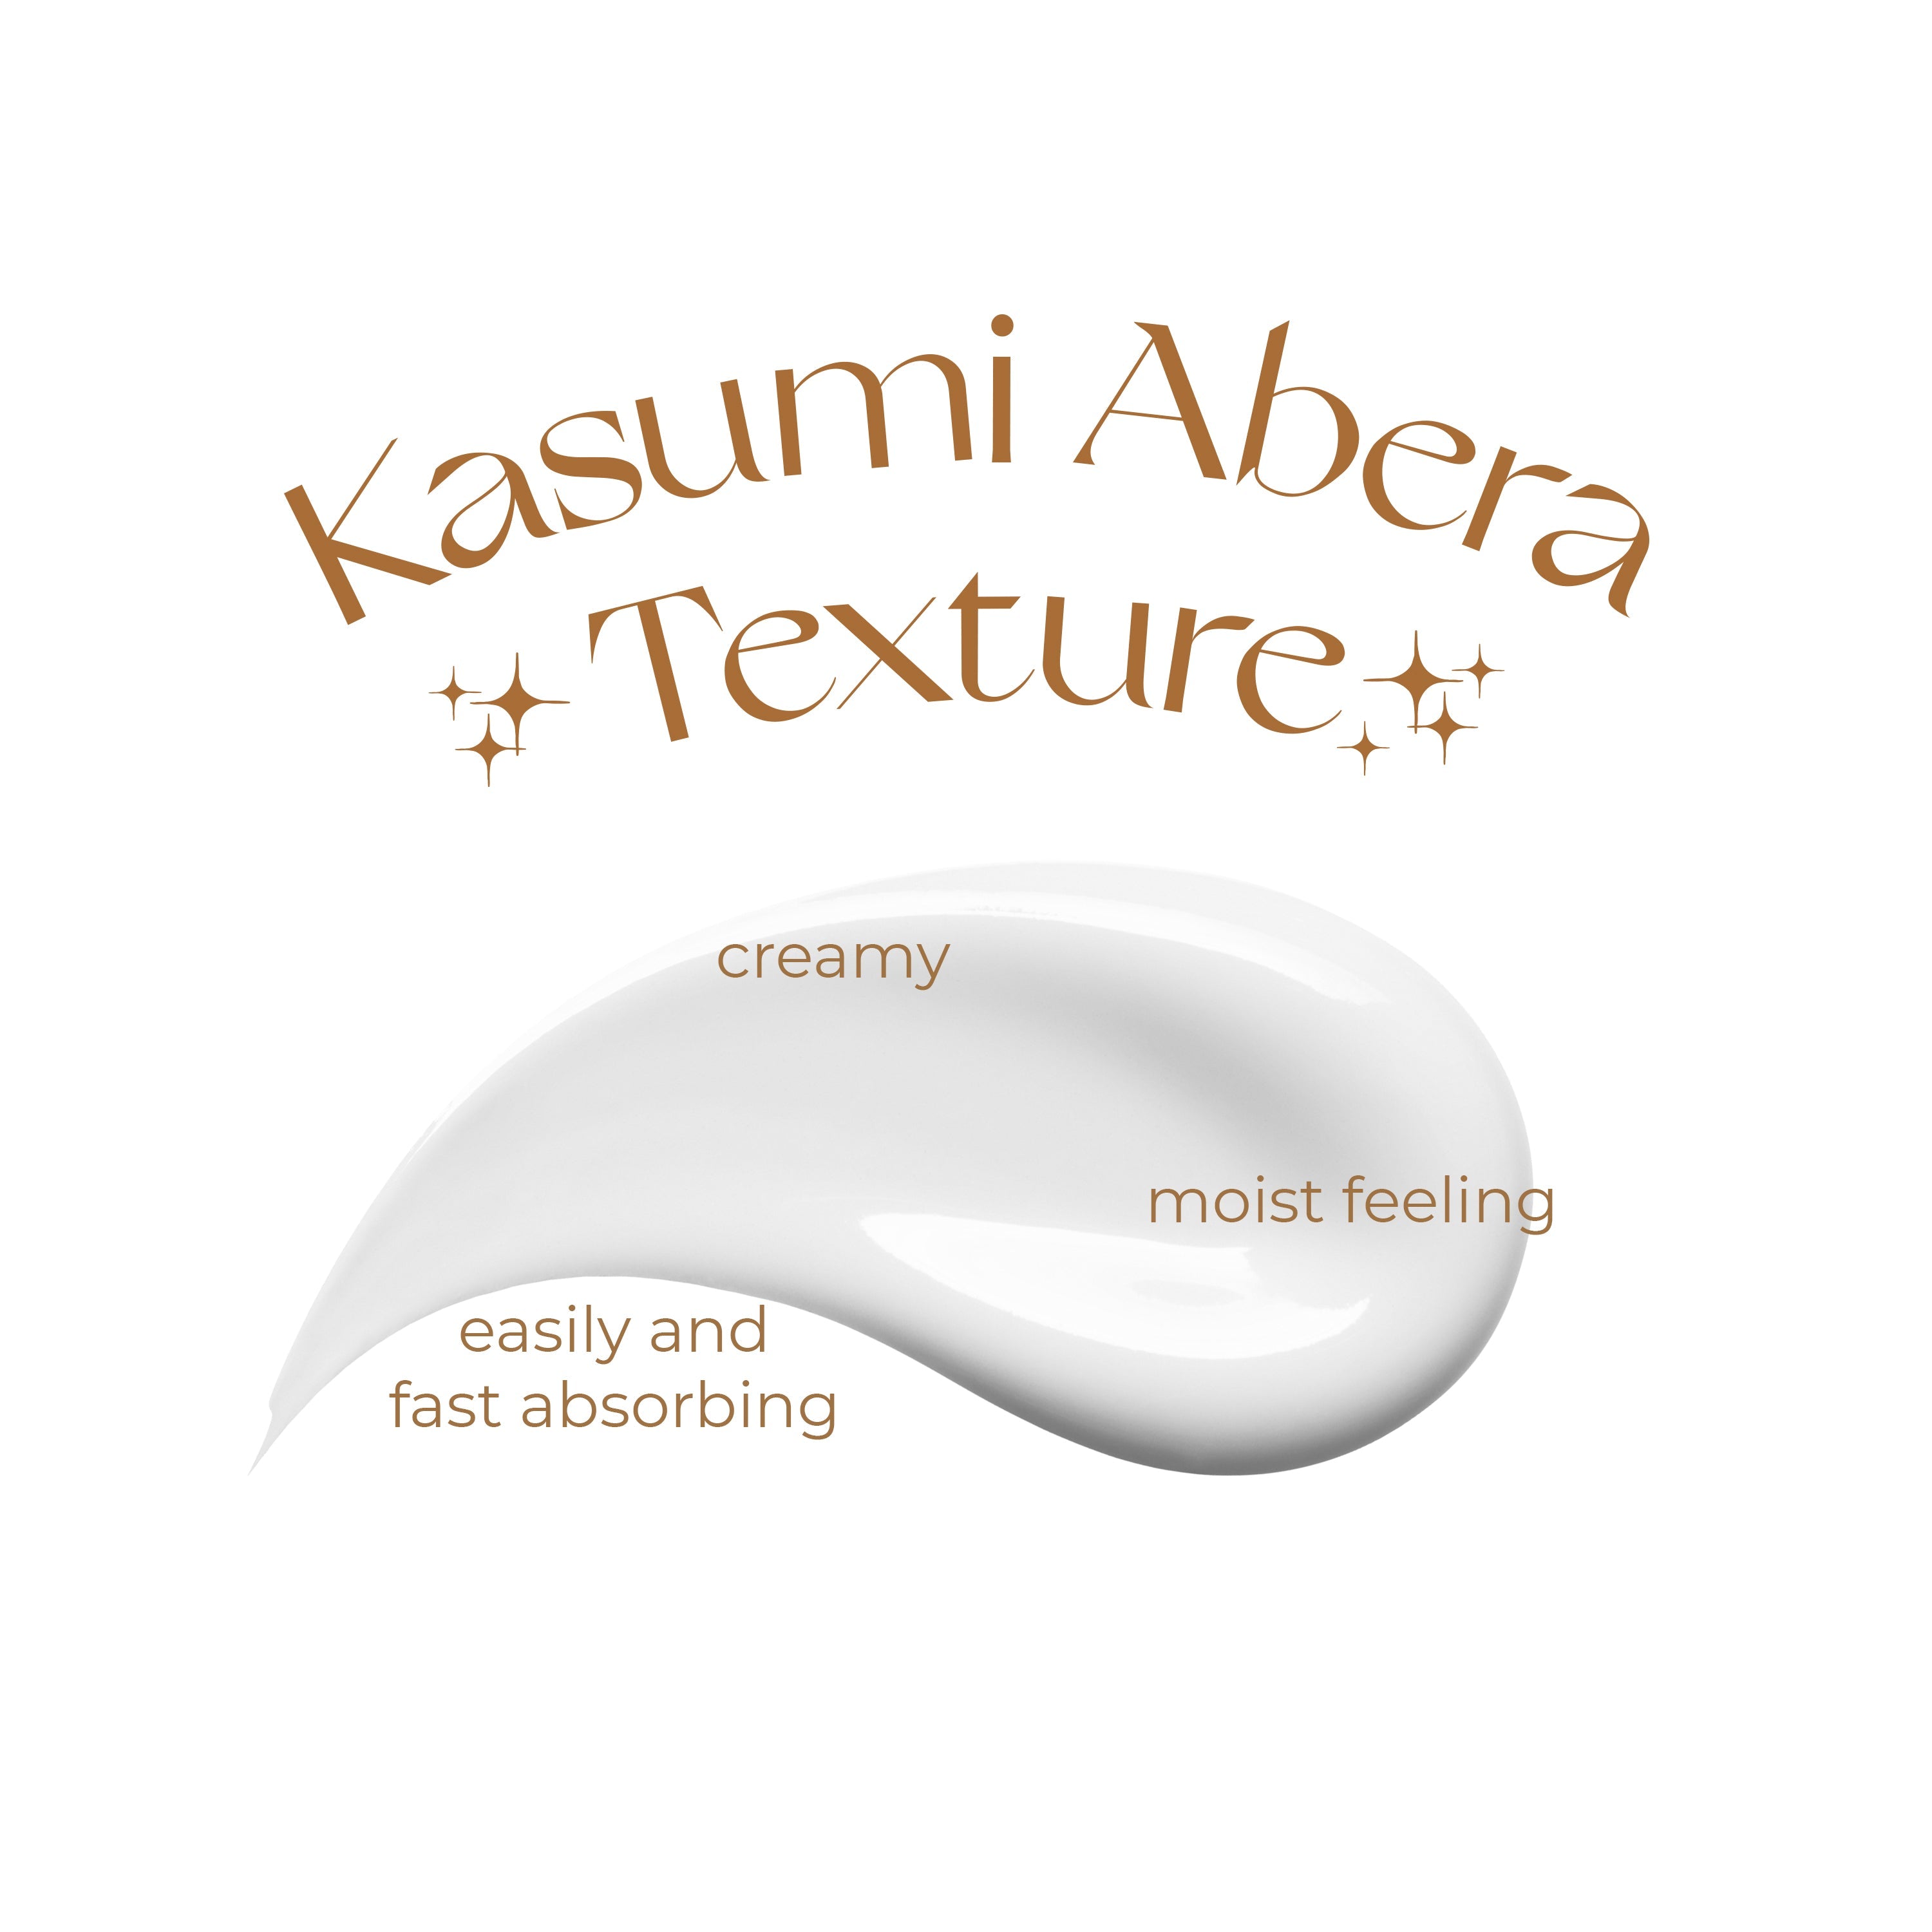 Kasumi Abera Whitening Cream - LTN